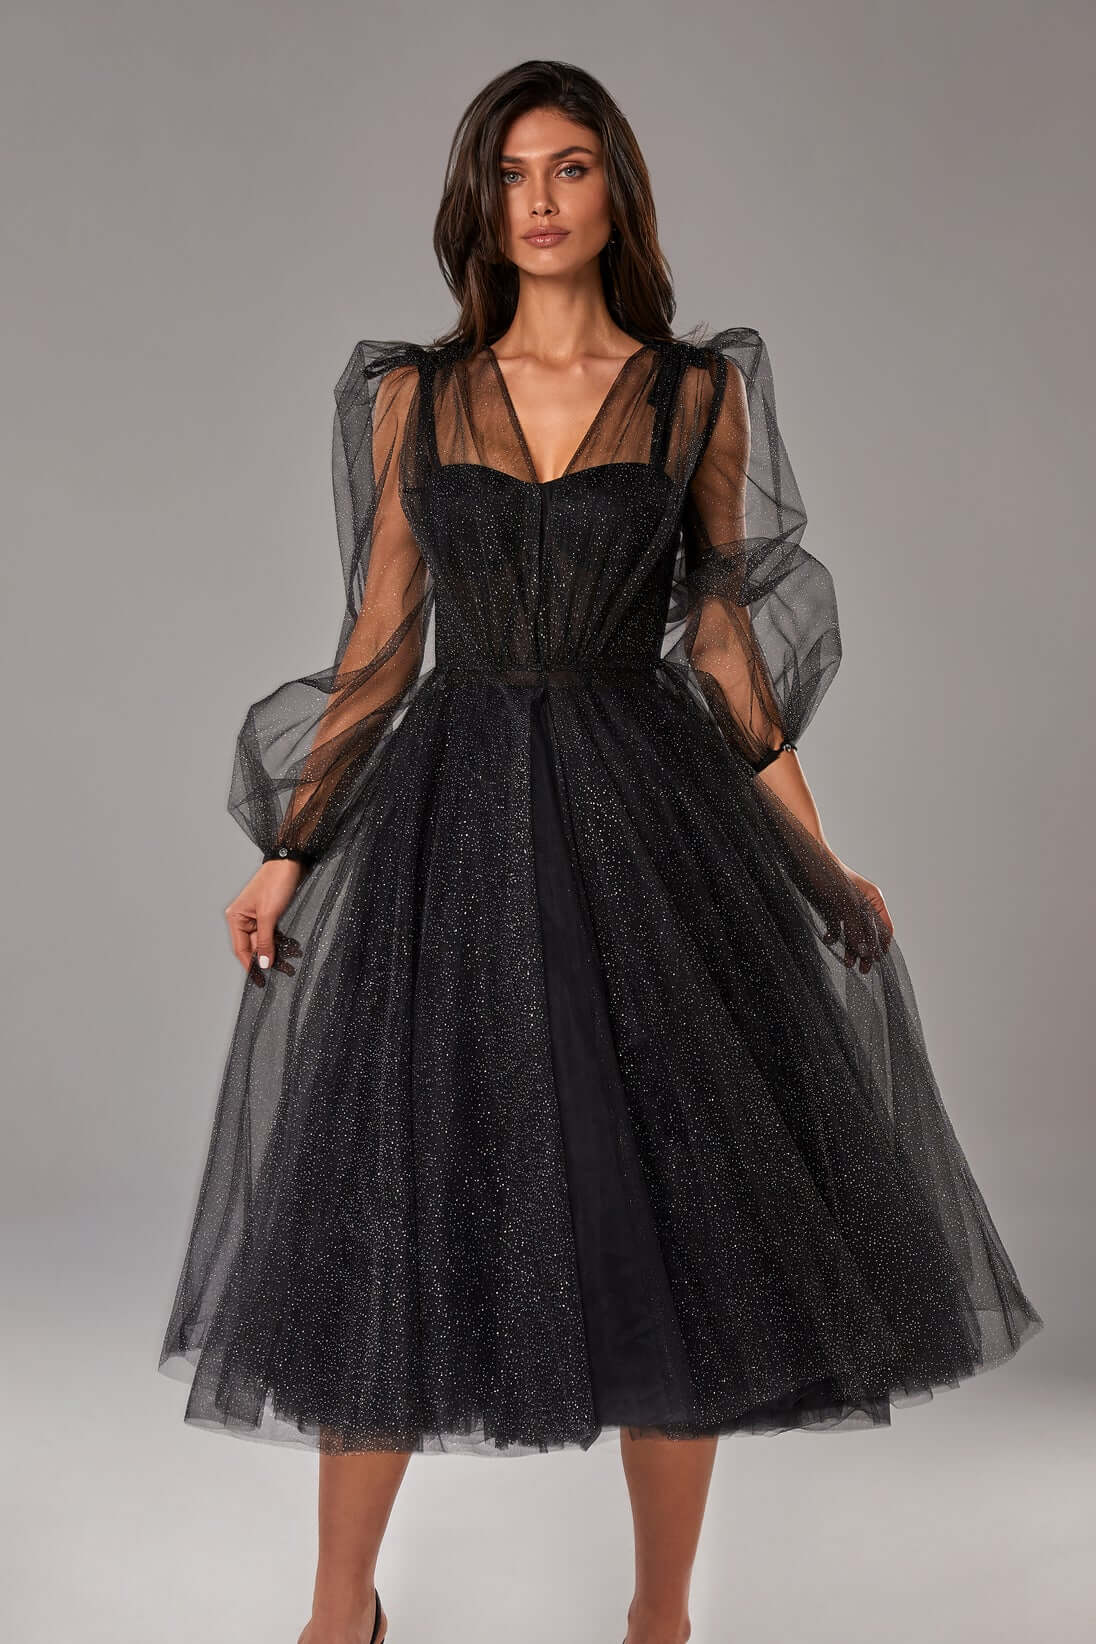 Black Wedding Guest Dress Ideas: 18 Outfits + FAQs